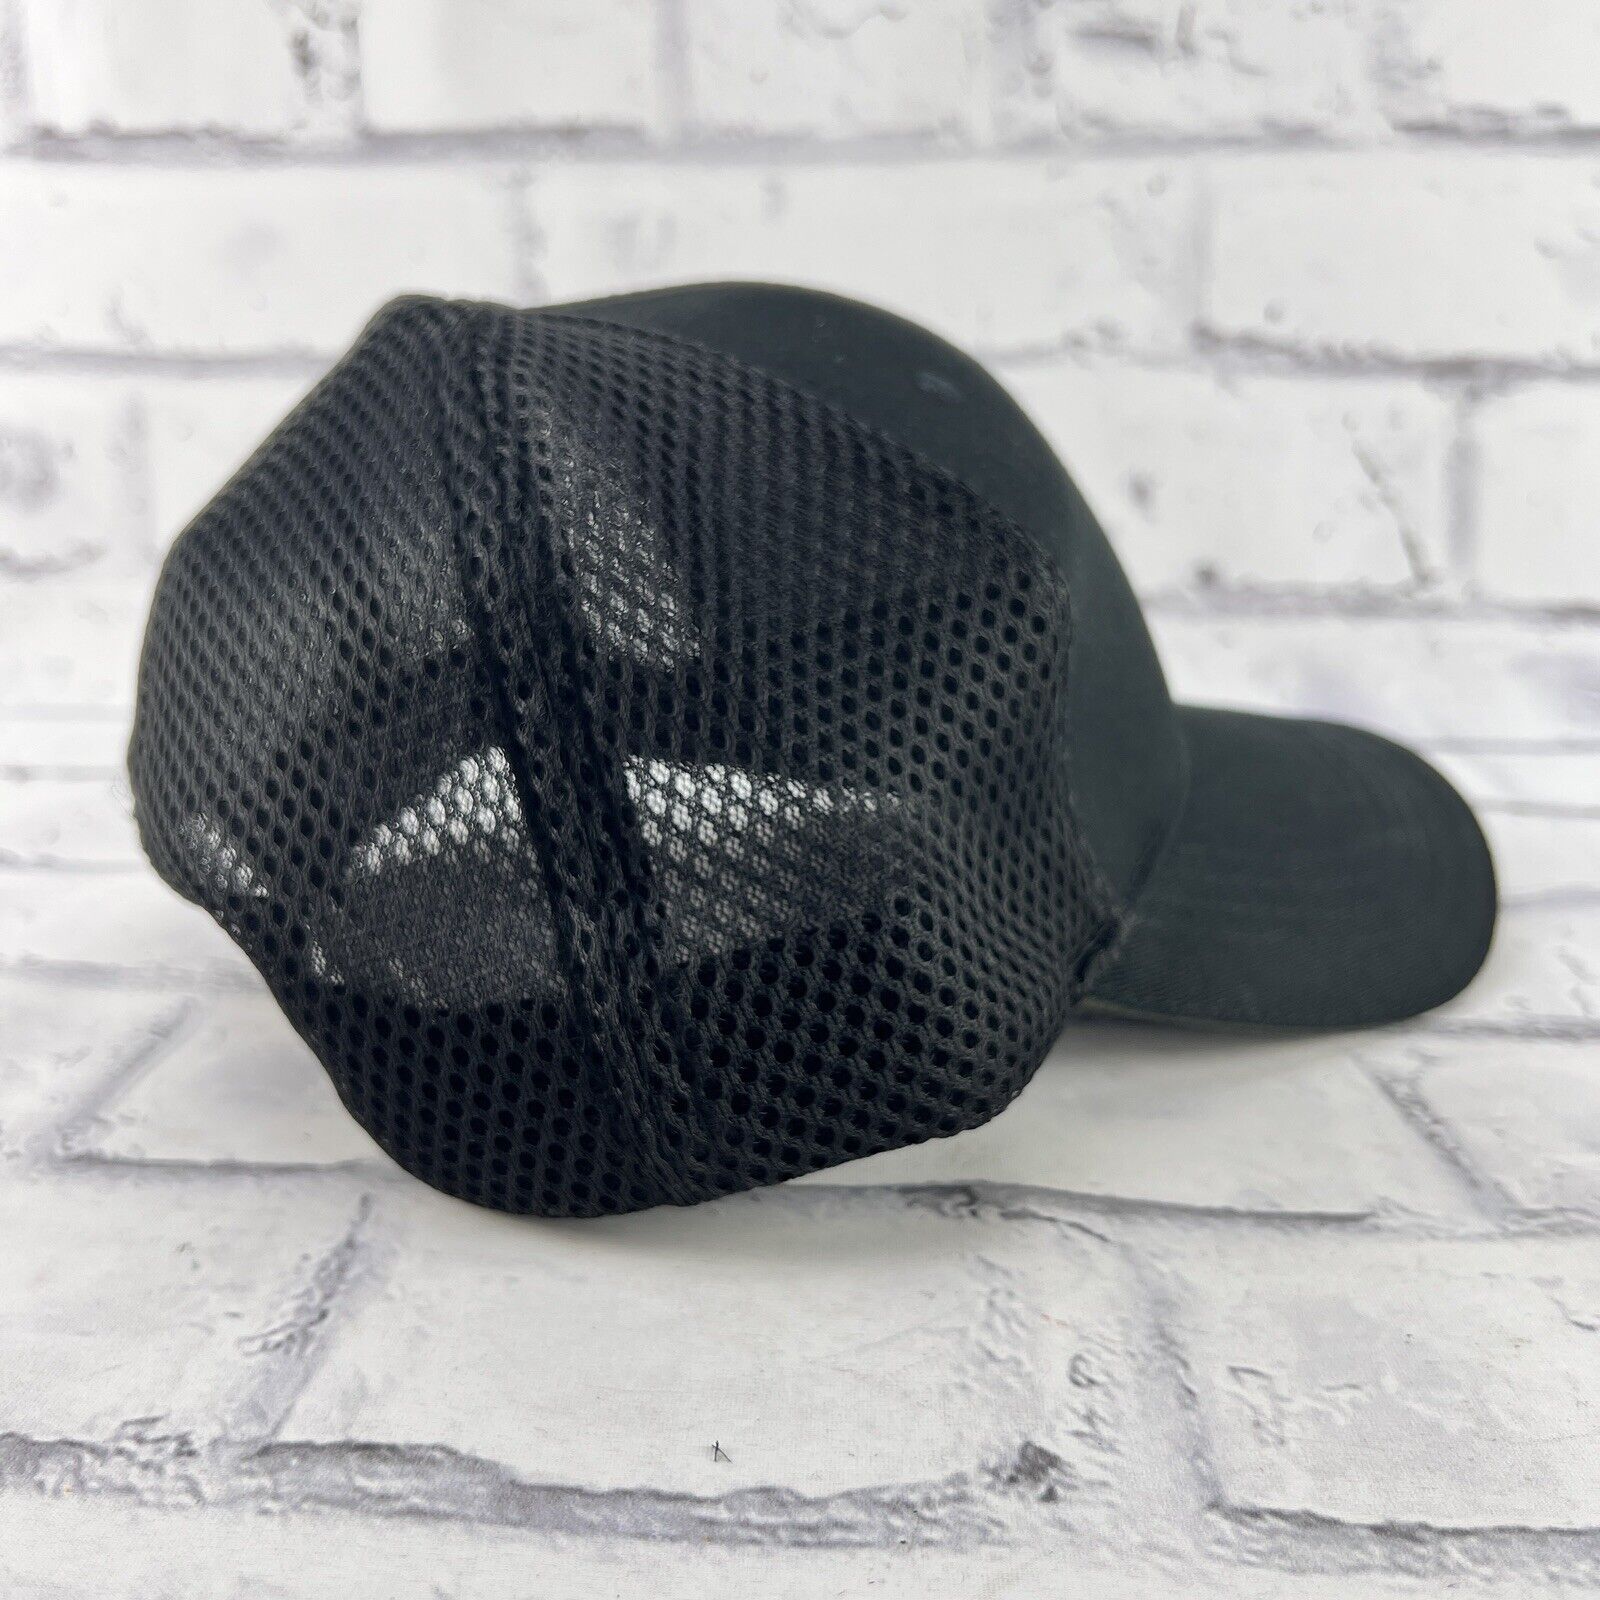 Glock Perfection Baseball Hat Cap Black Mesh Adjustable Breathable New